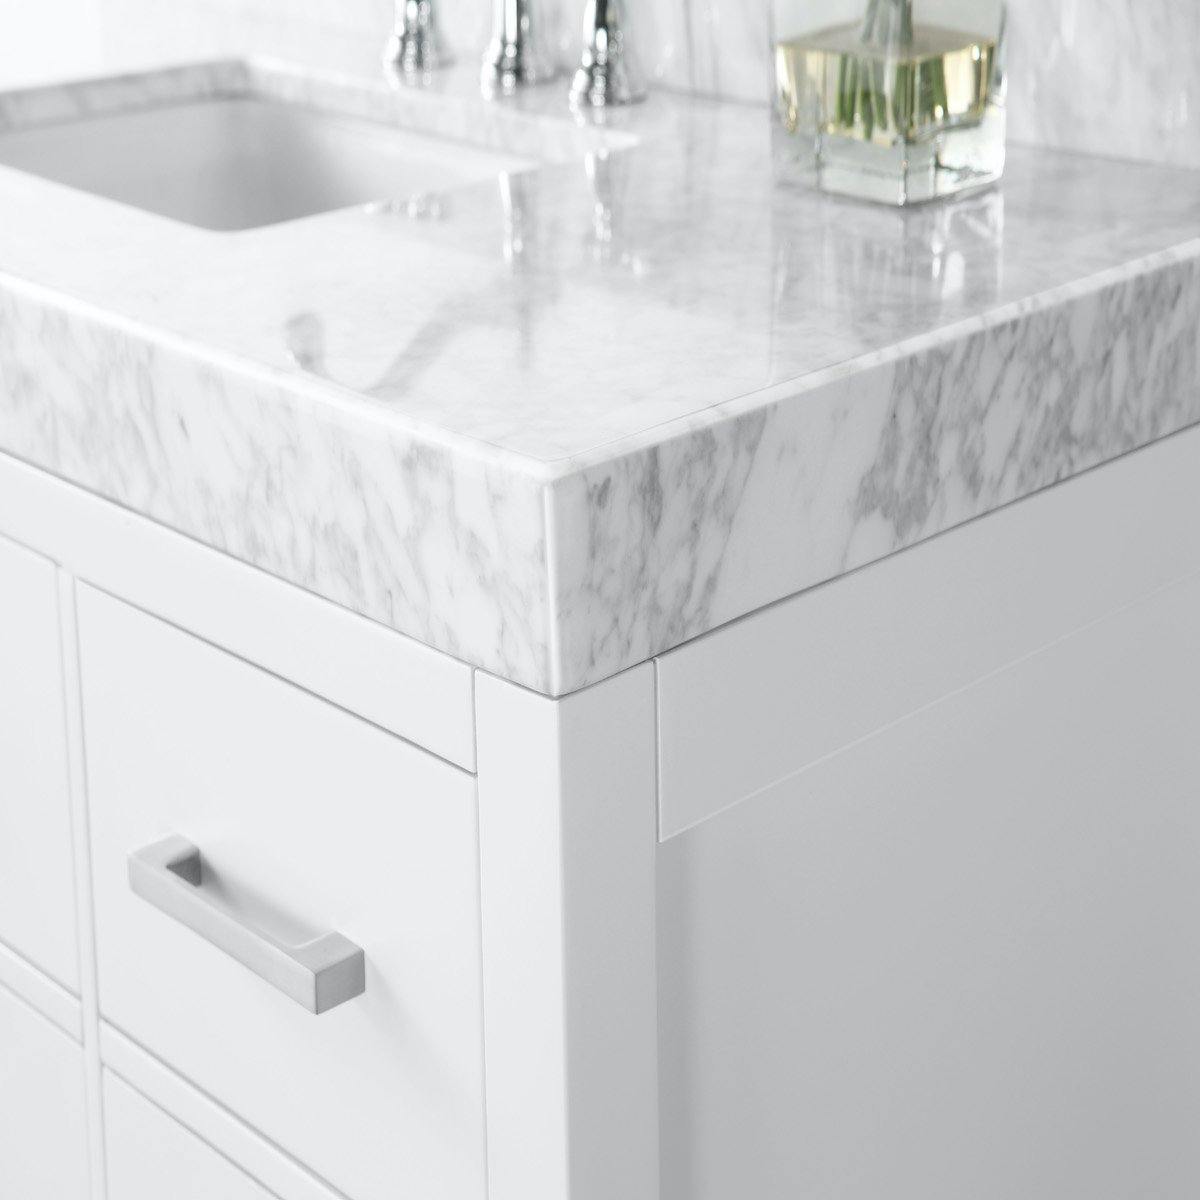 Ancerre Designs Elizabeth 36 Inch White with Nickel Hardware Single Vanity Counter